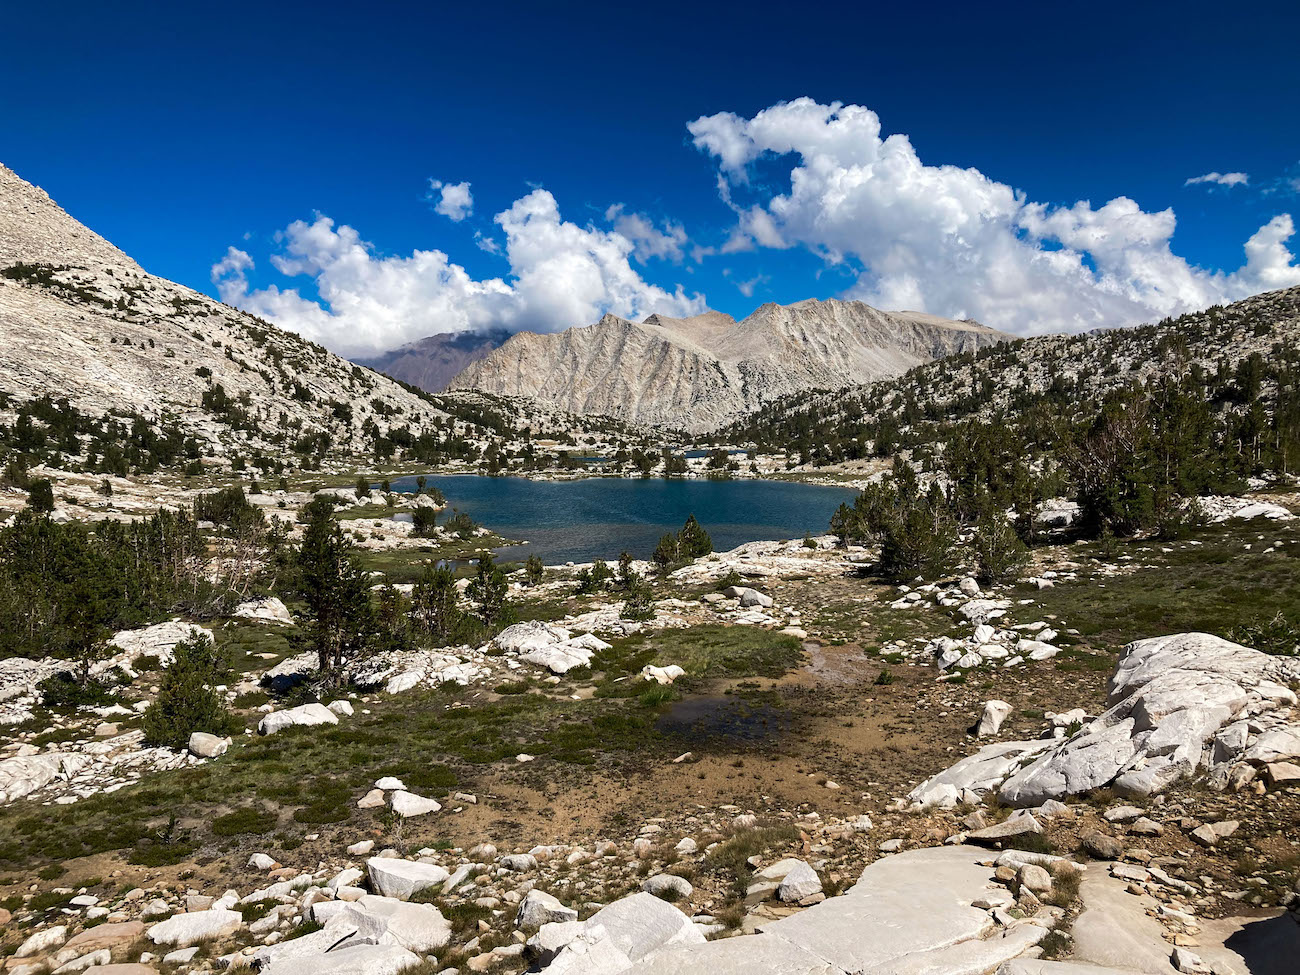 Chalfant Lakes in the Eastern Sierras